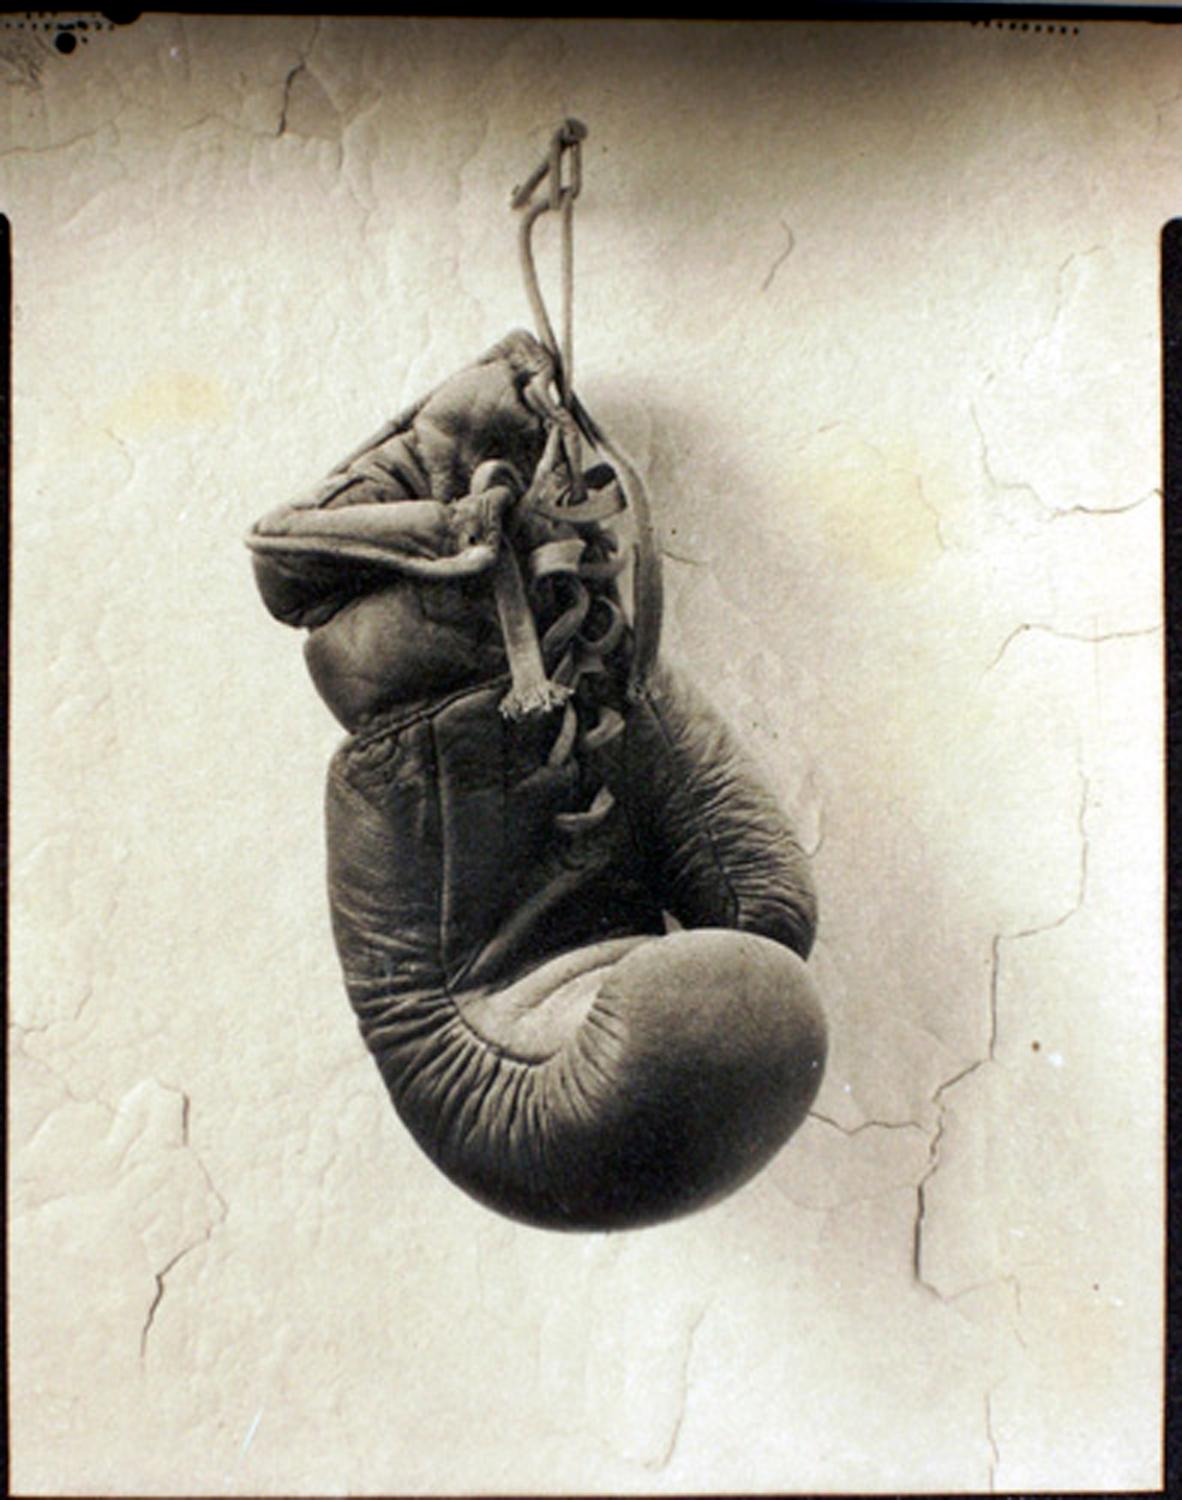 Paul Christenson Black and White Photograph - Boxing Glove